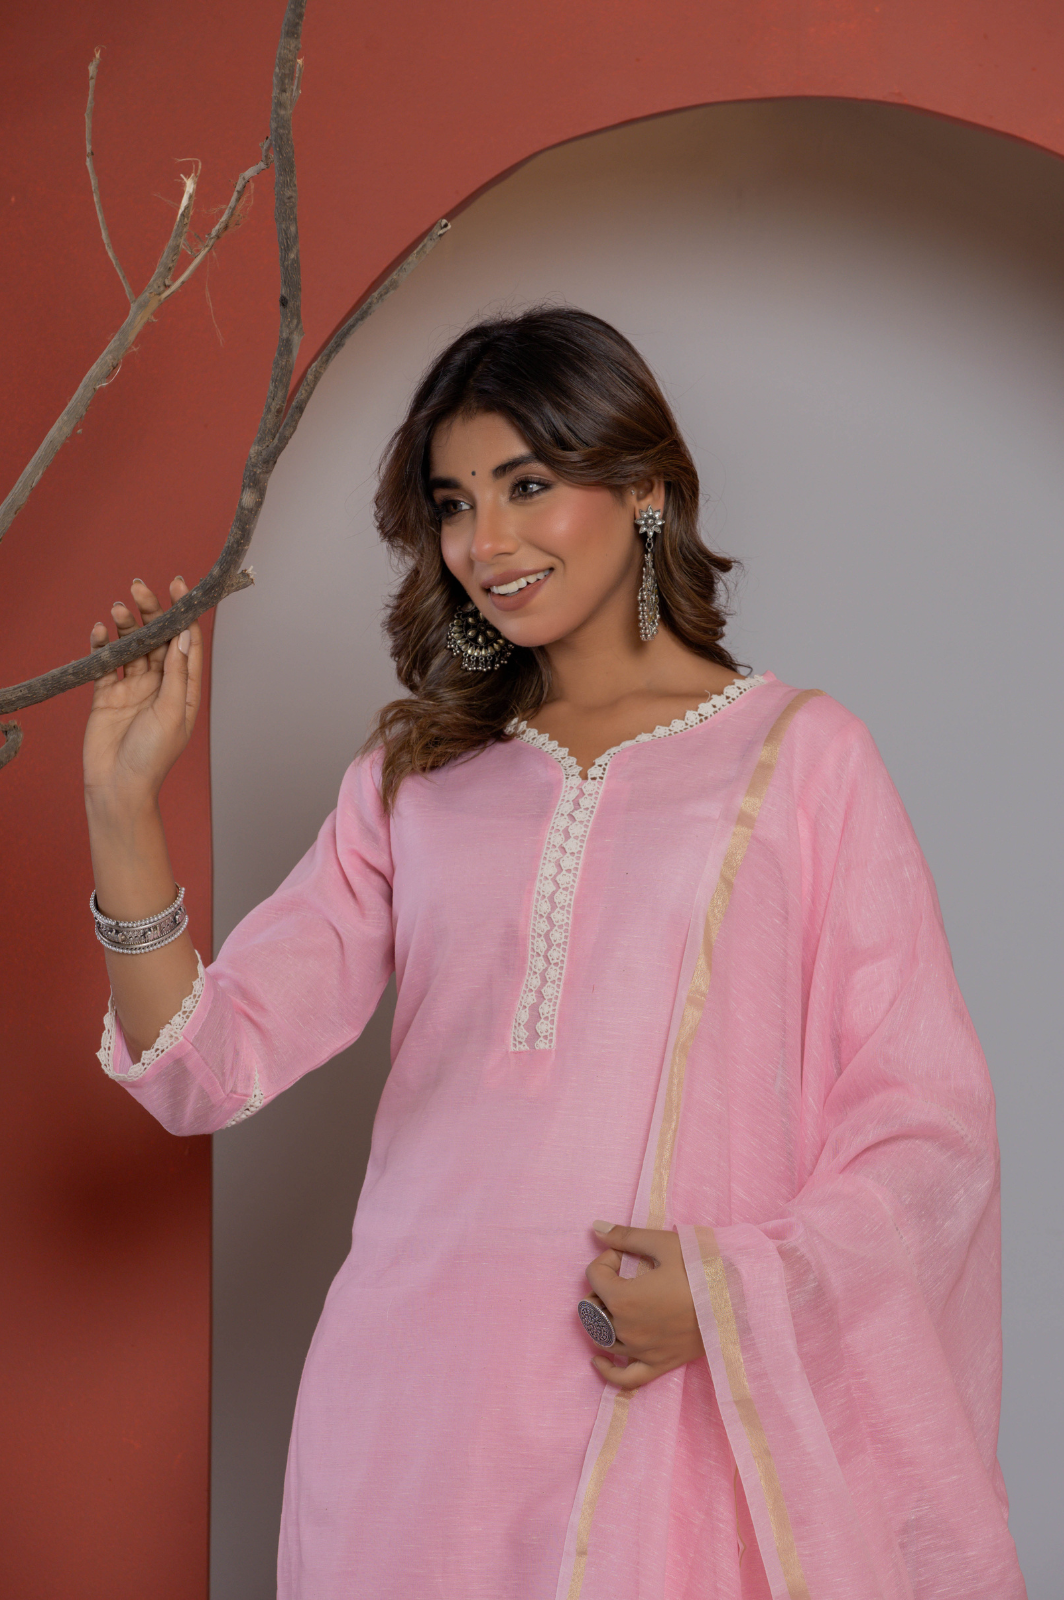 Cotton linen solid pink kurta set